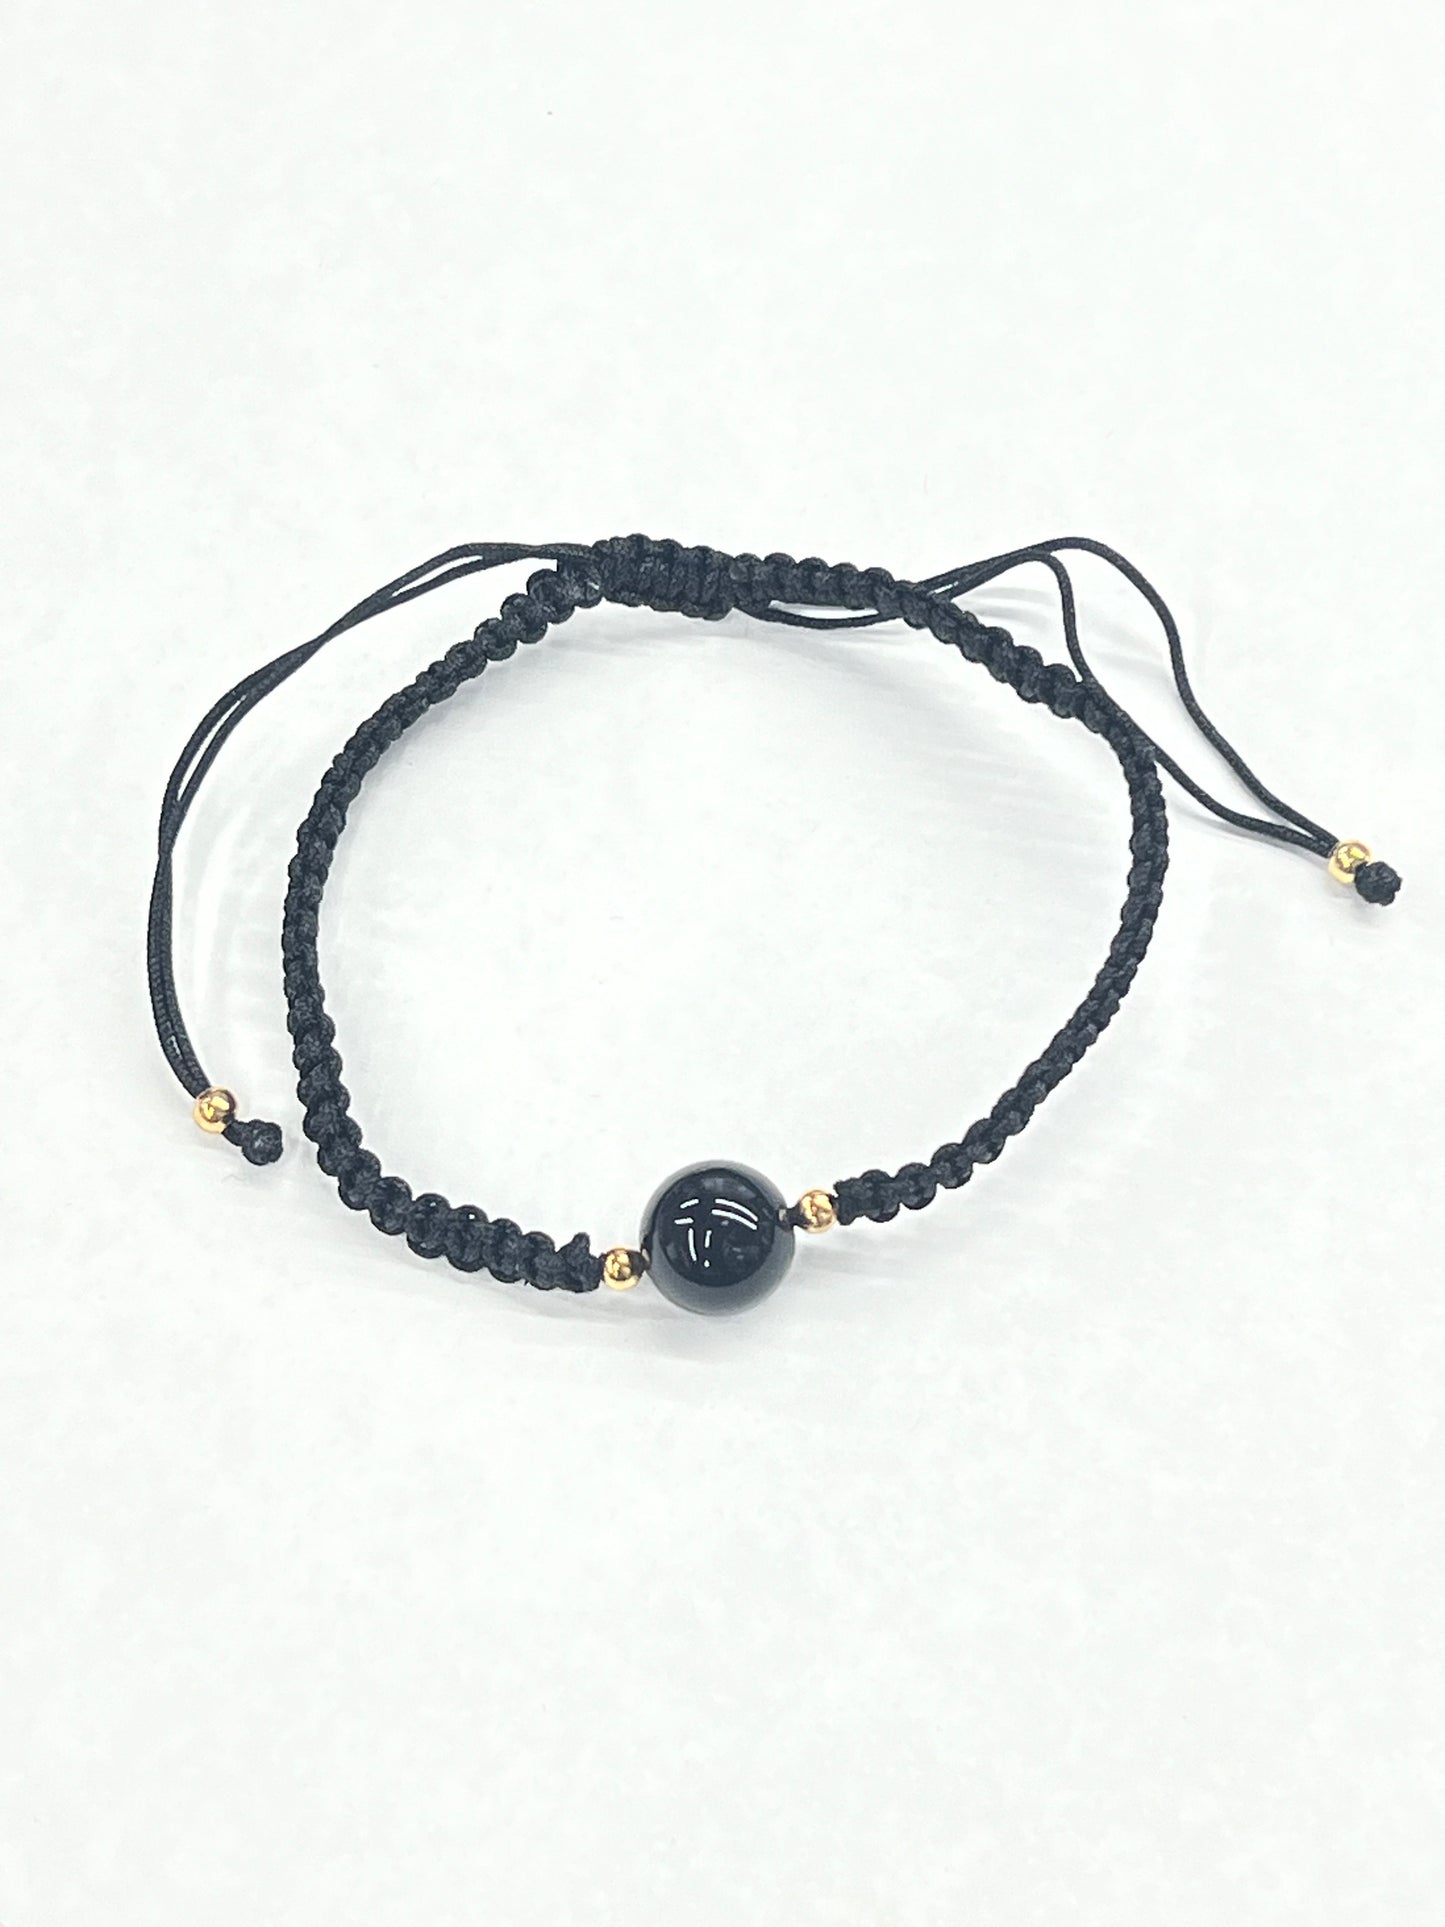 Handmade String Bracelets with Stone